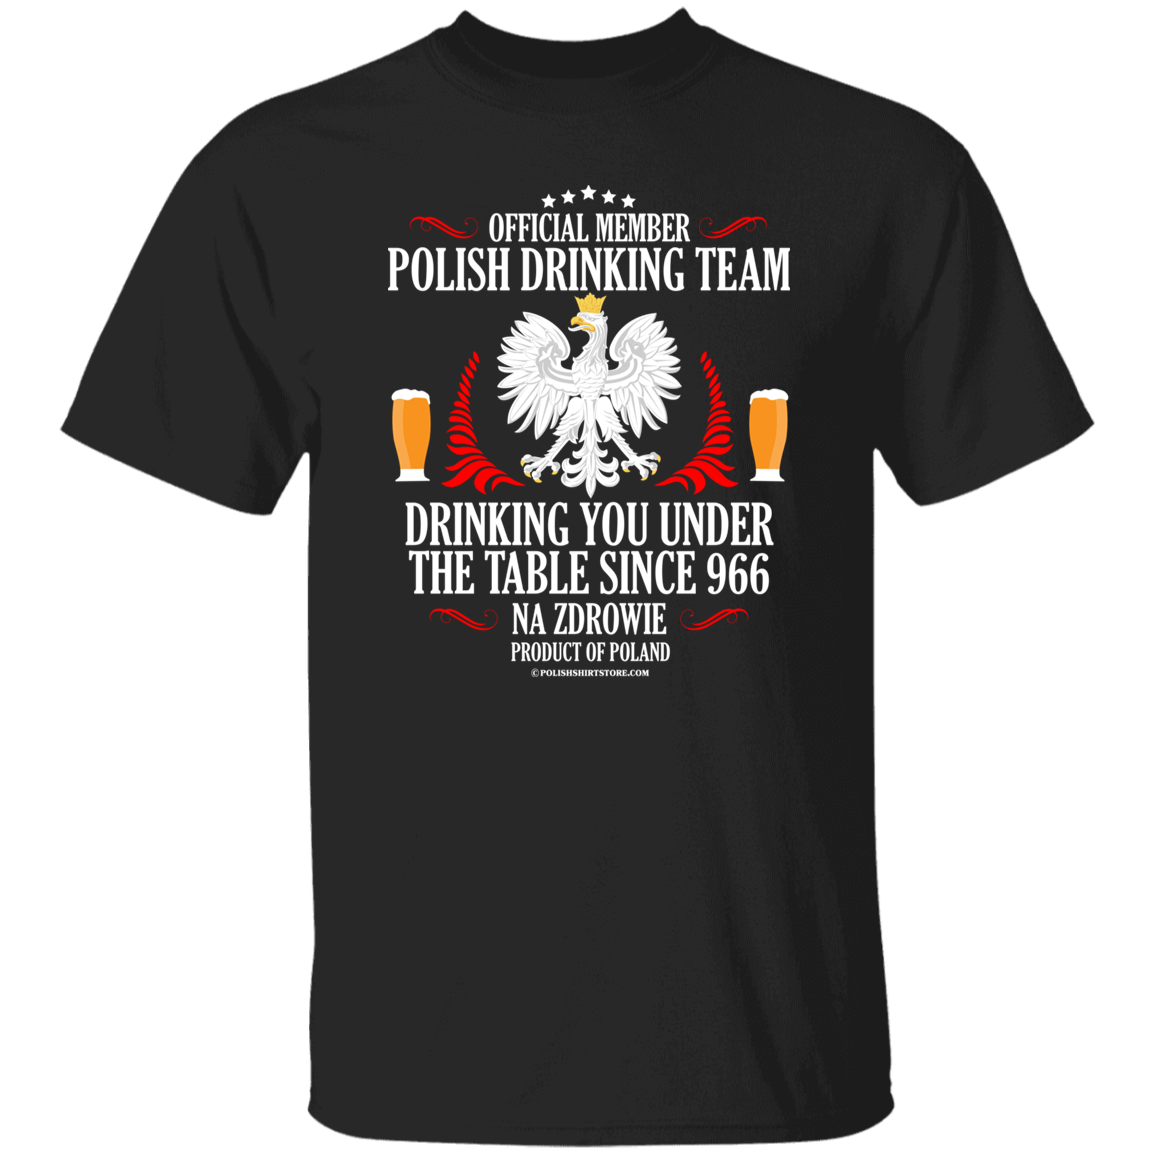 Official Member Of The Polish Drinking Team Apparel CustomCat G500 5.3 oz. T-Shirt Black S